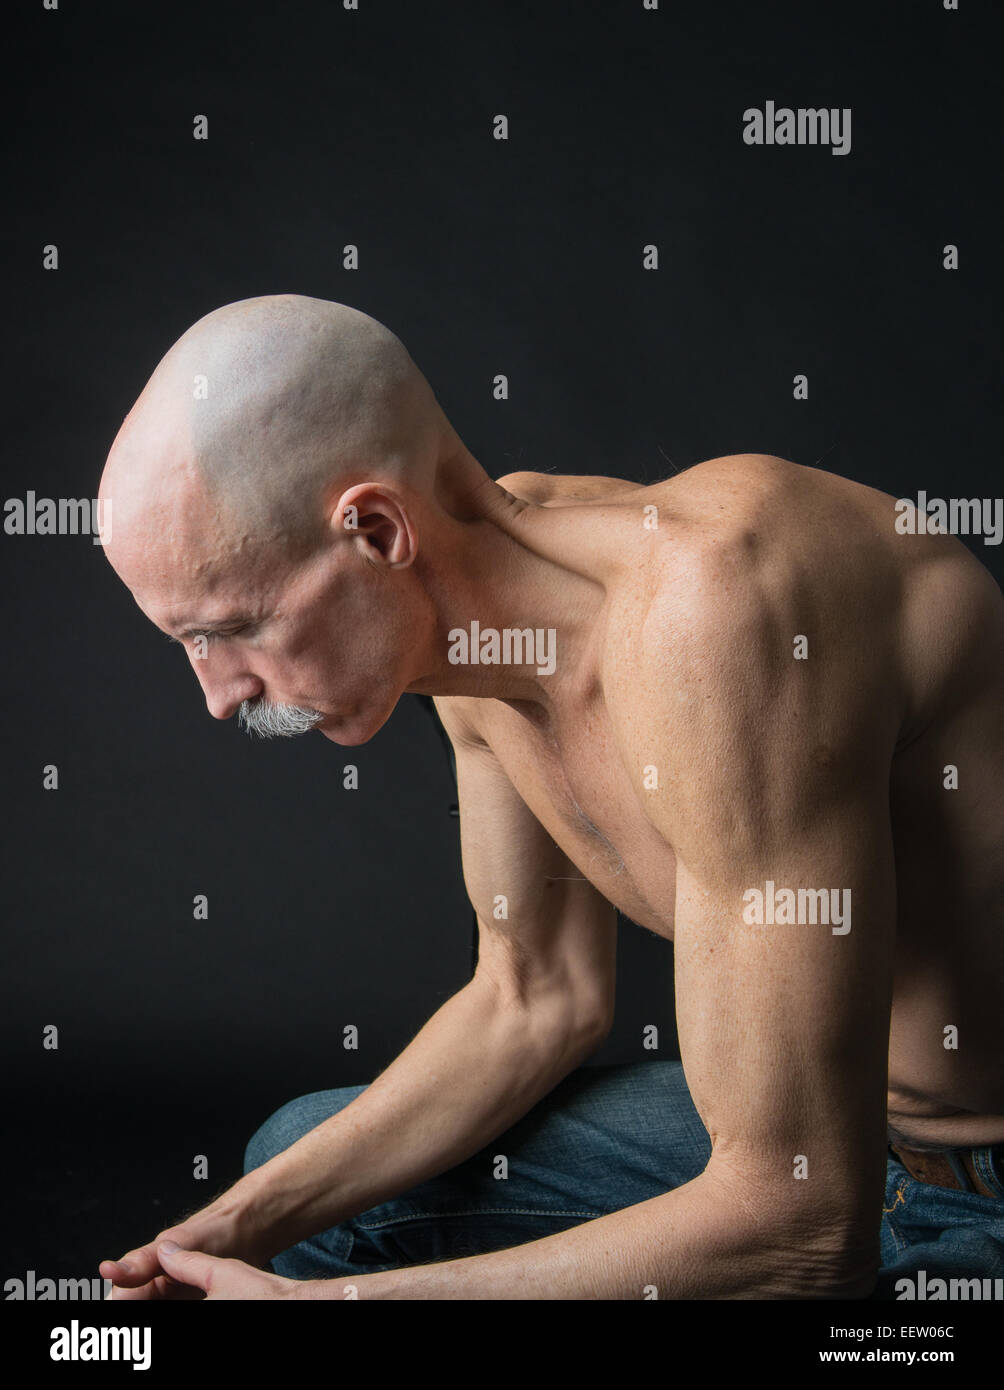 Man skinny bald 